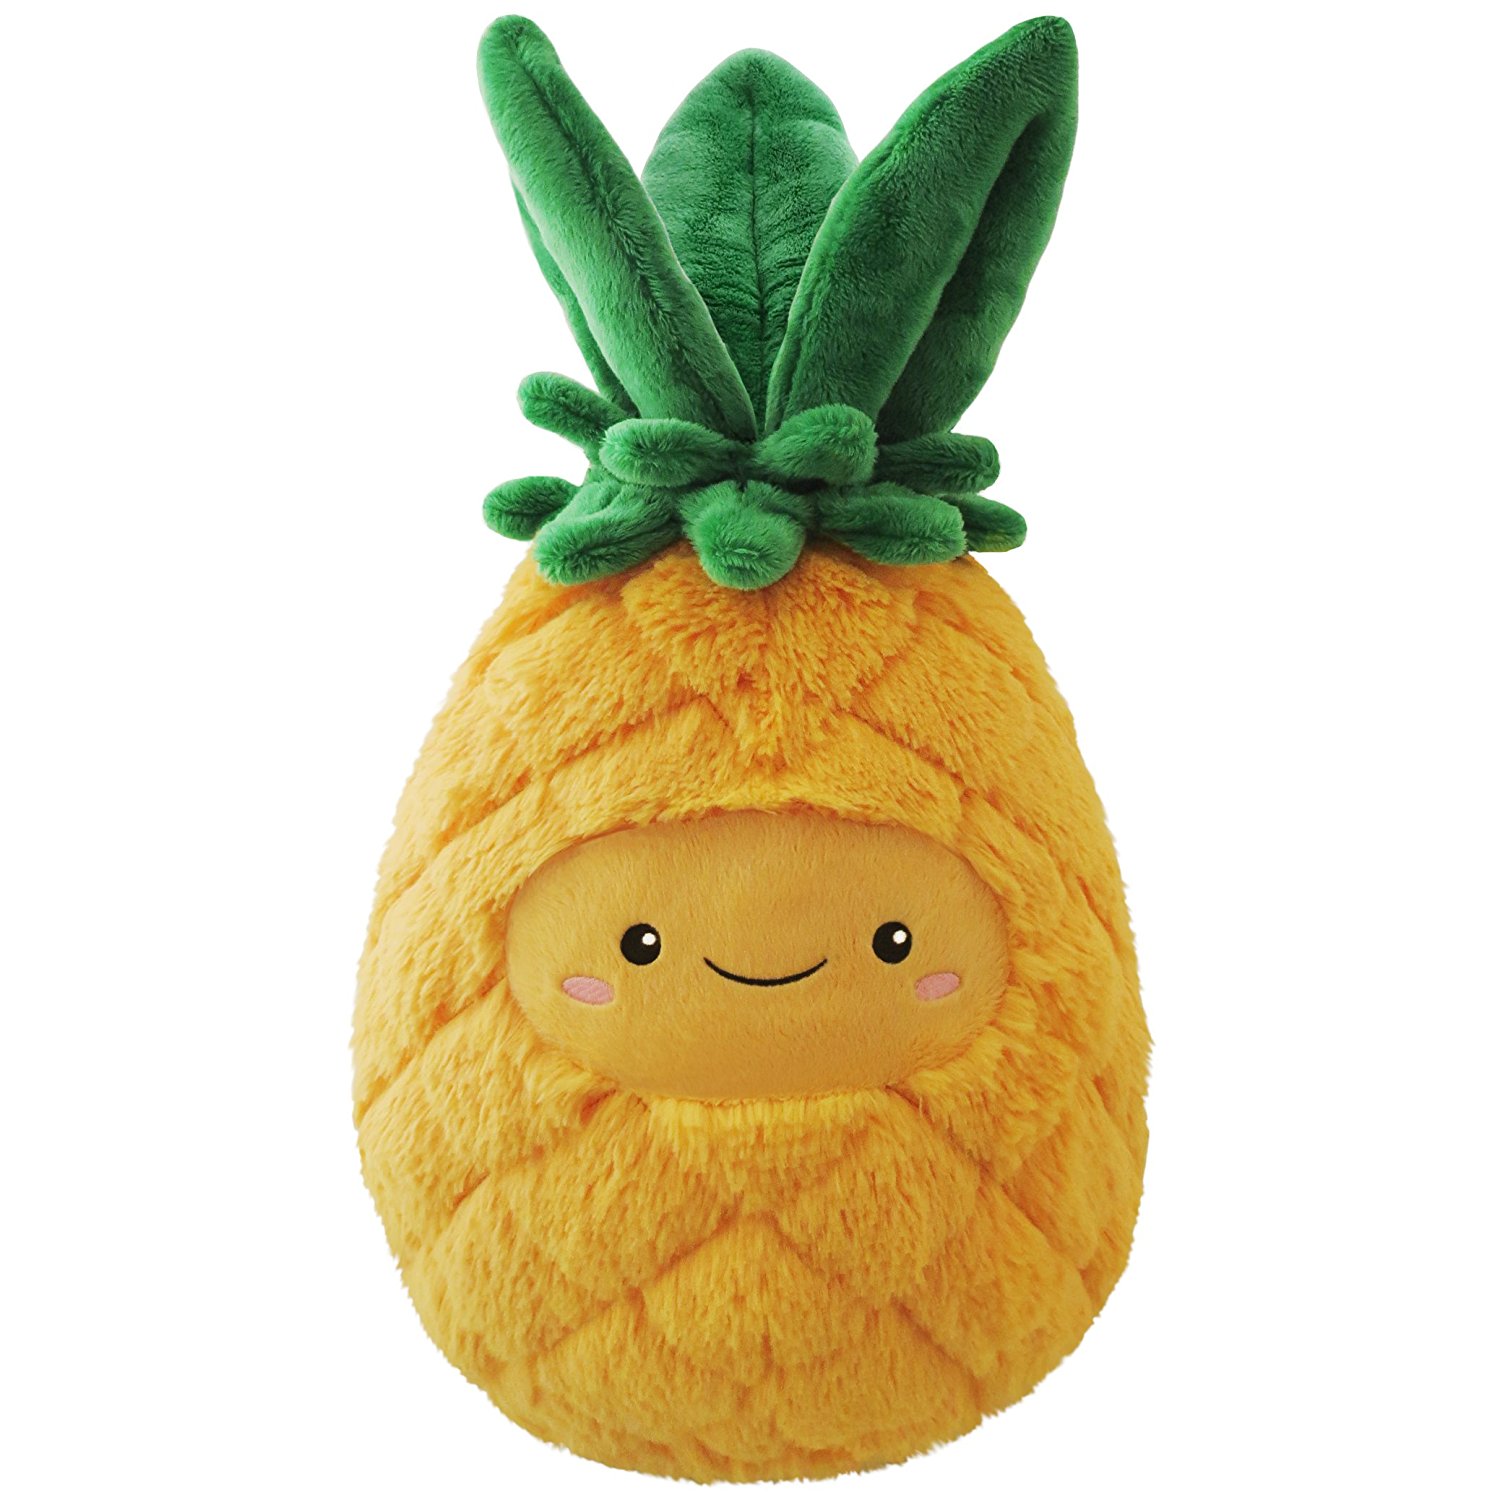 Amazon.com: Squishable / Comfort Food Pineapple 15